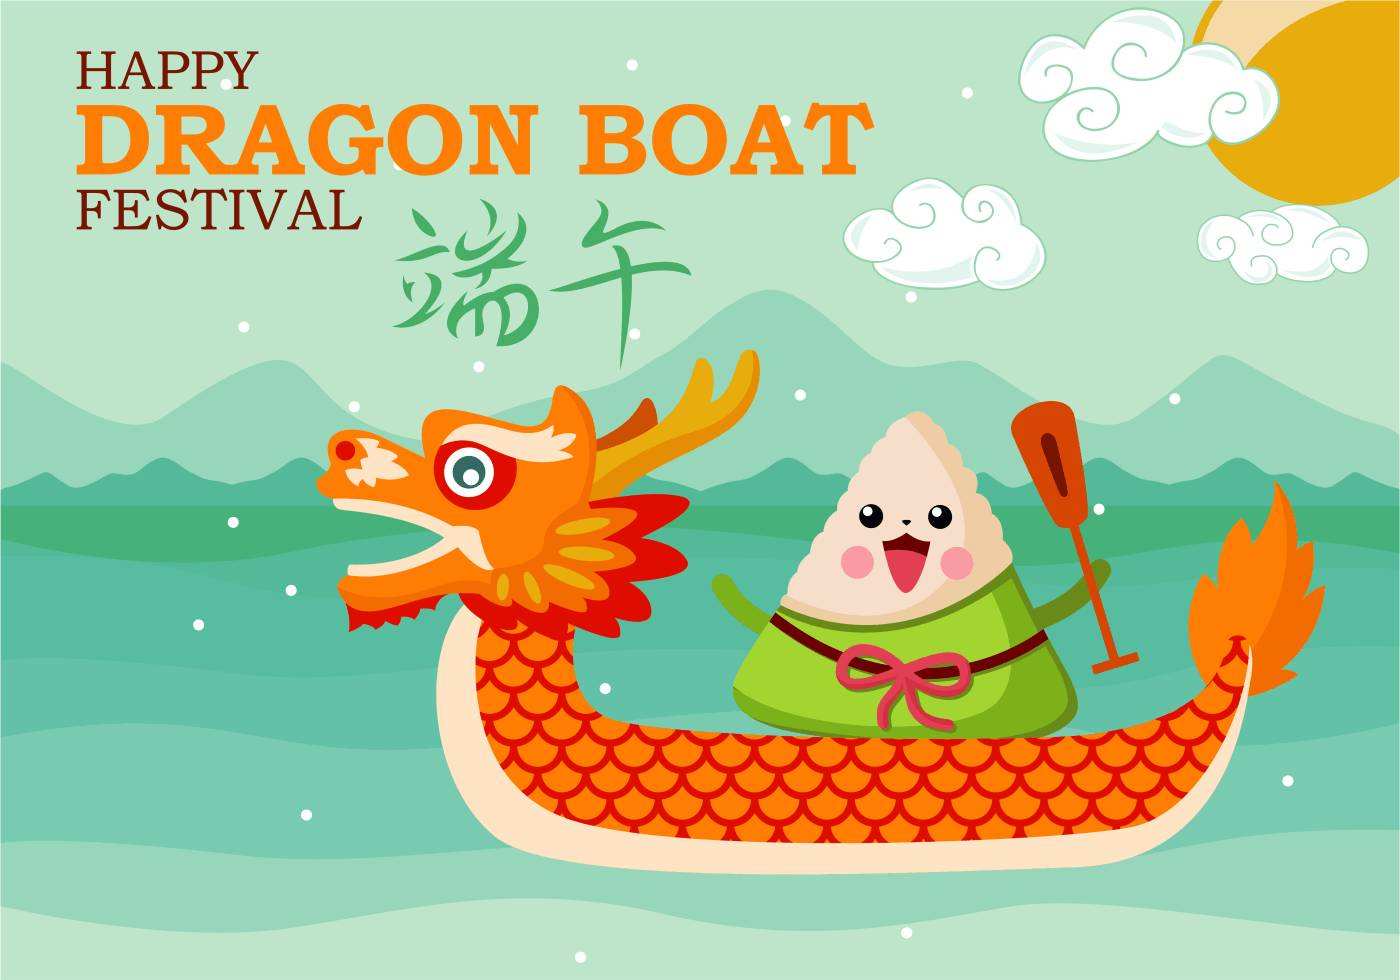 Dragon boat festival.jpg